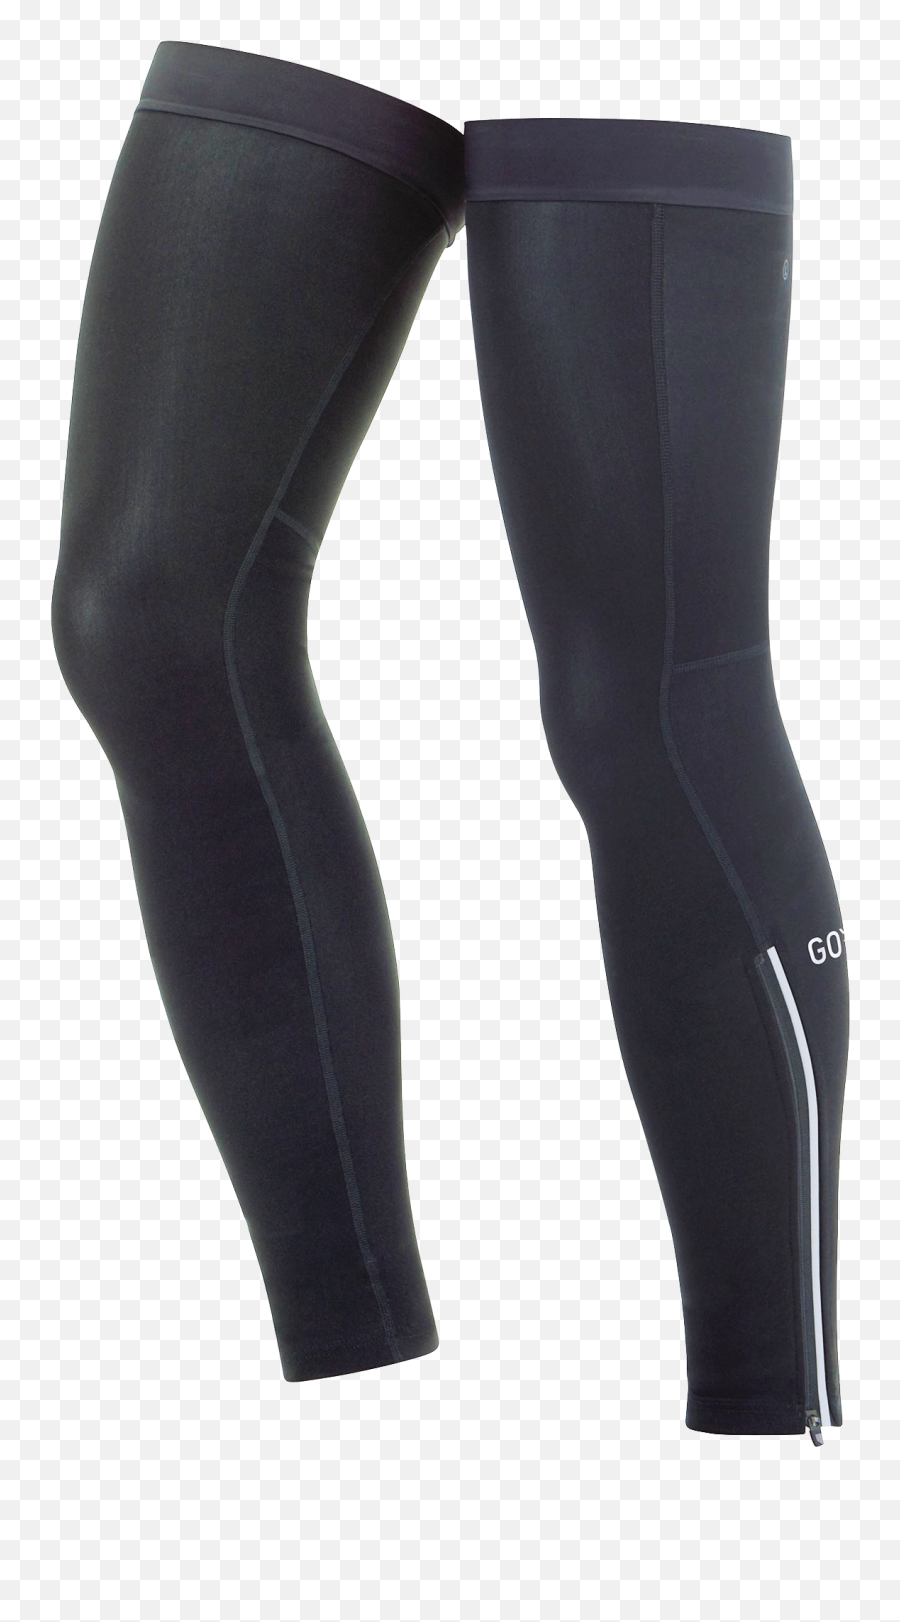 Gore Wear C3 Thermo Leg Warmers - Gore Windstopper Leg Warmers Png,Leg Transparent